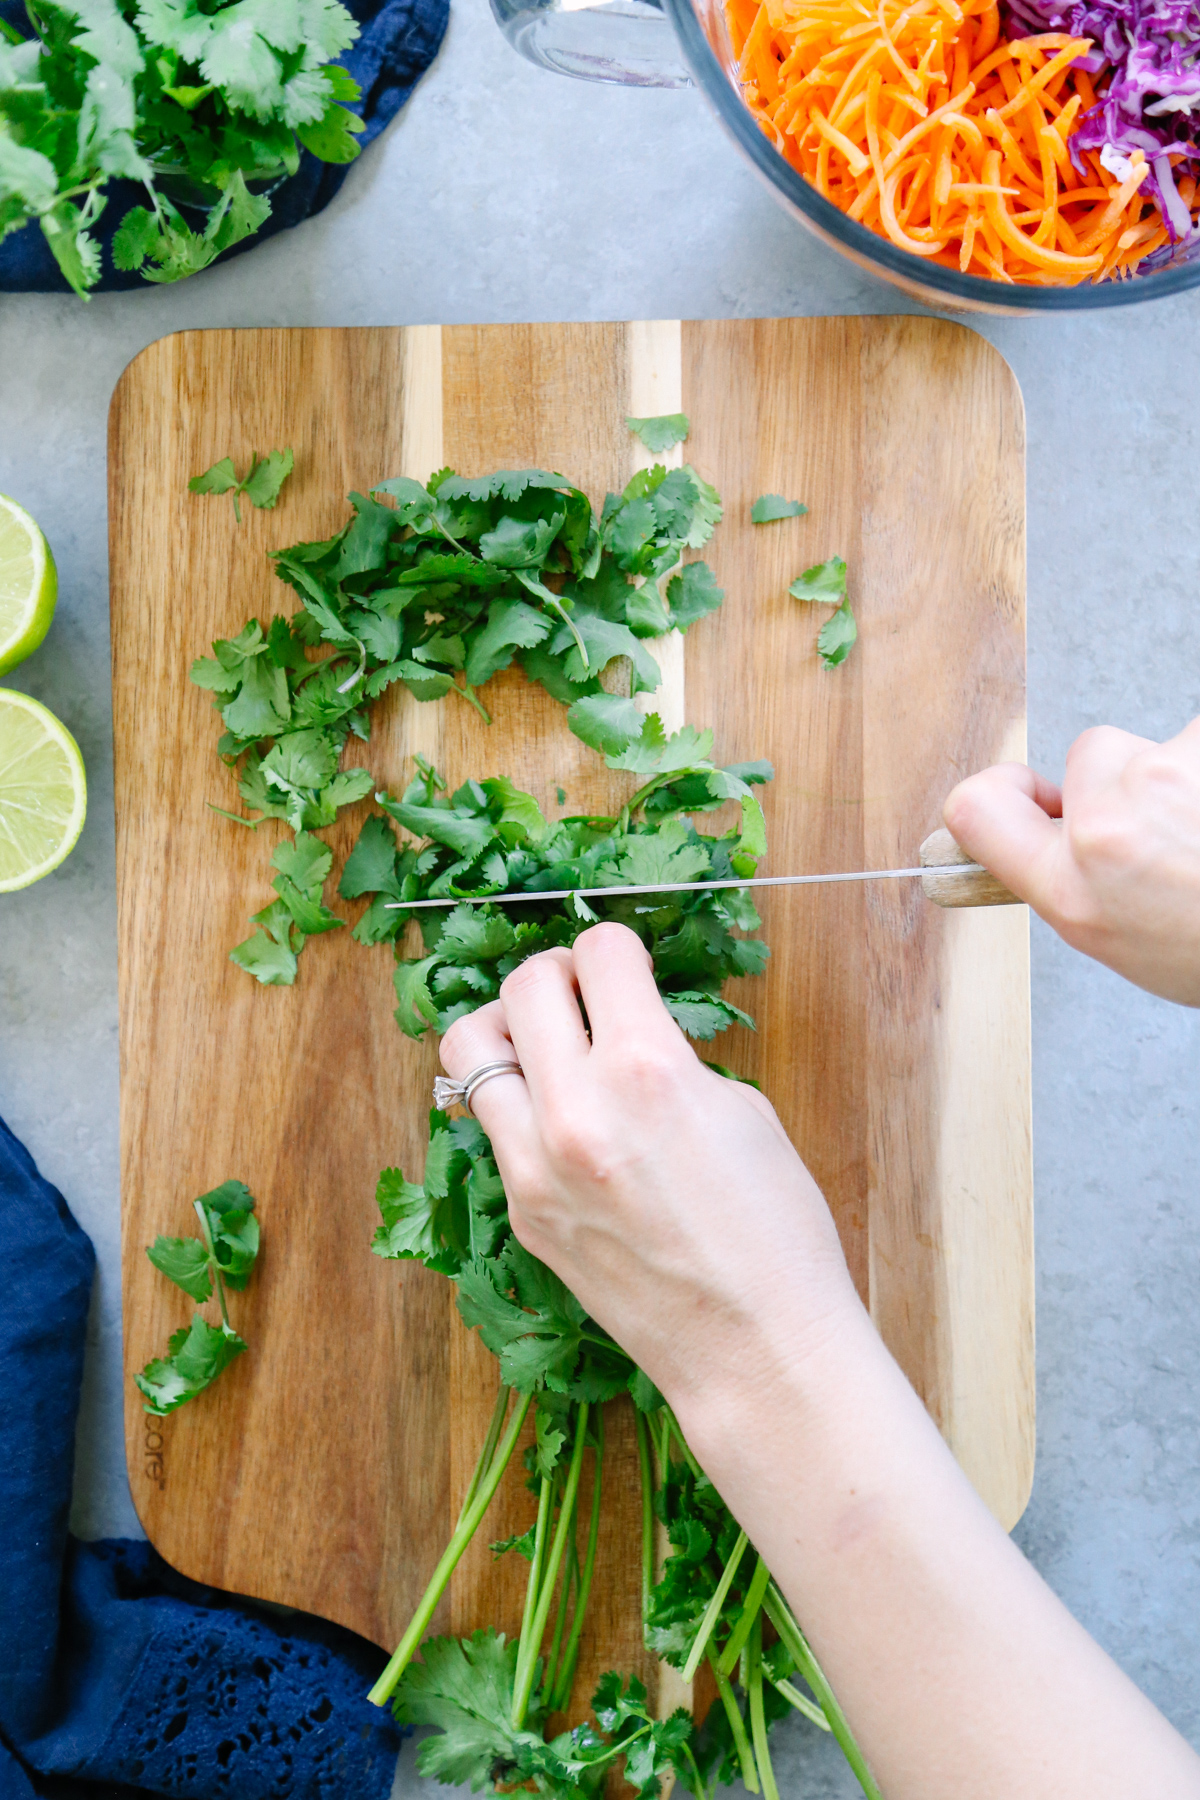 Cutting cilantro on a cutting board with a knife.